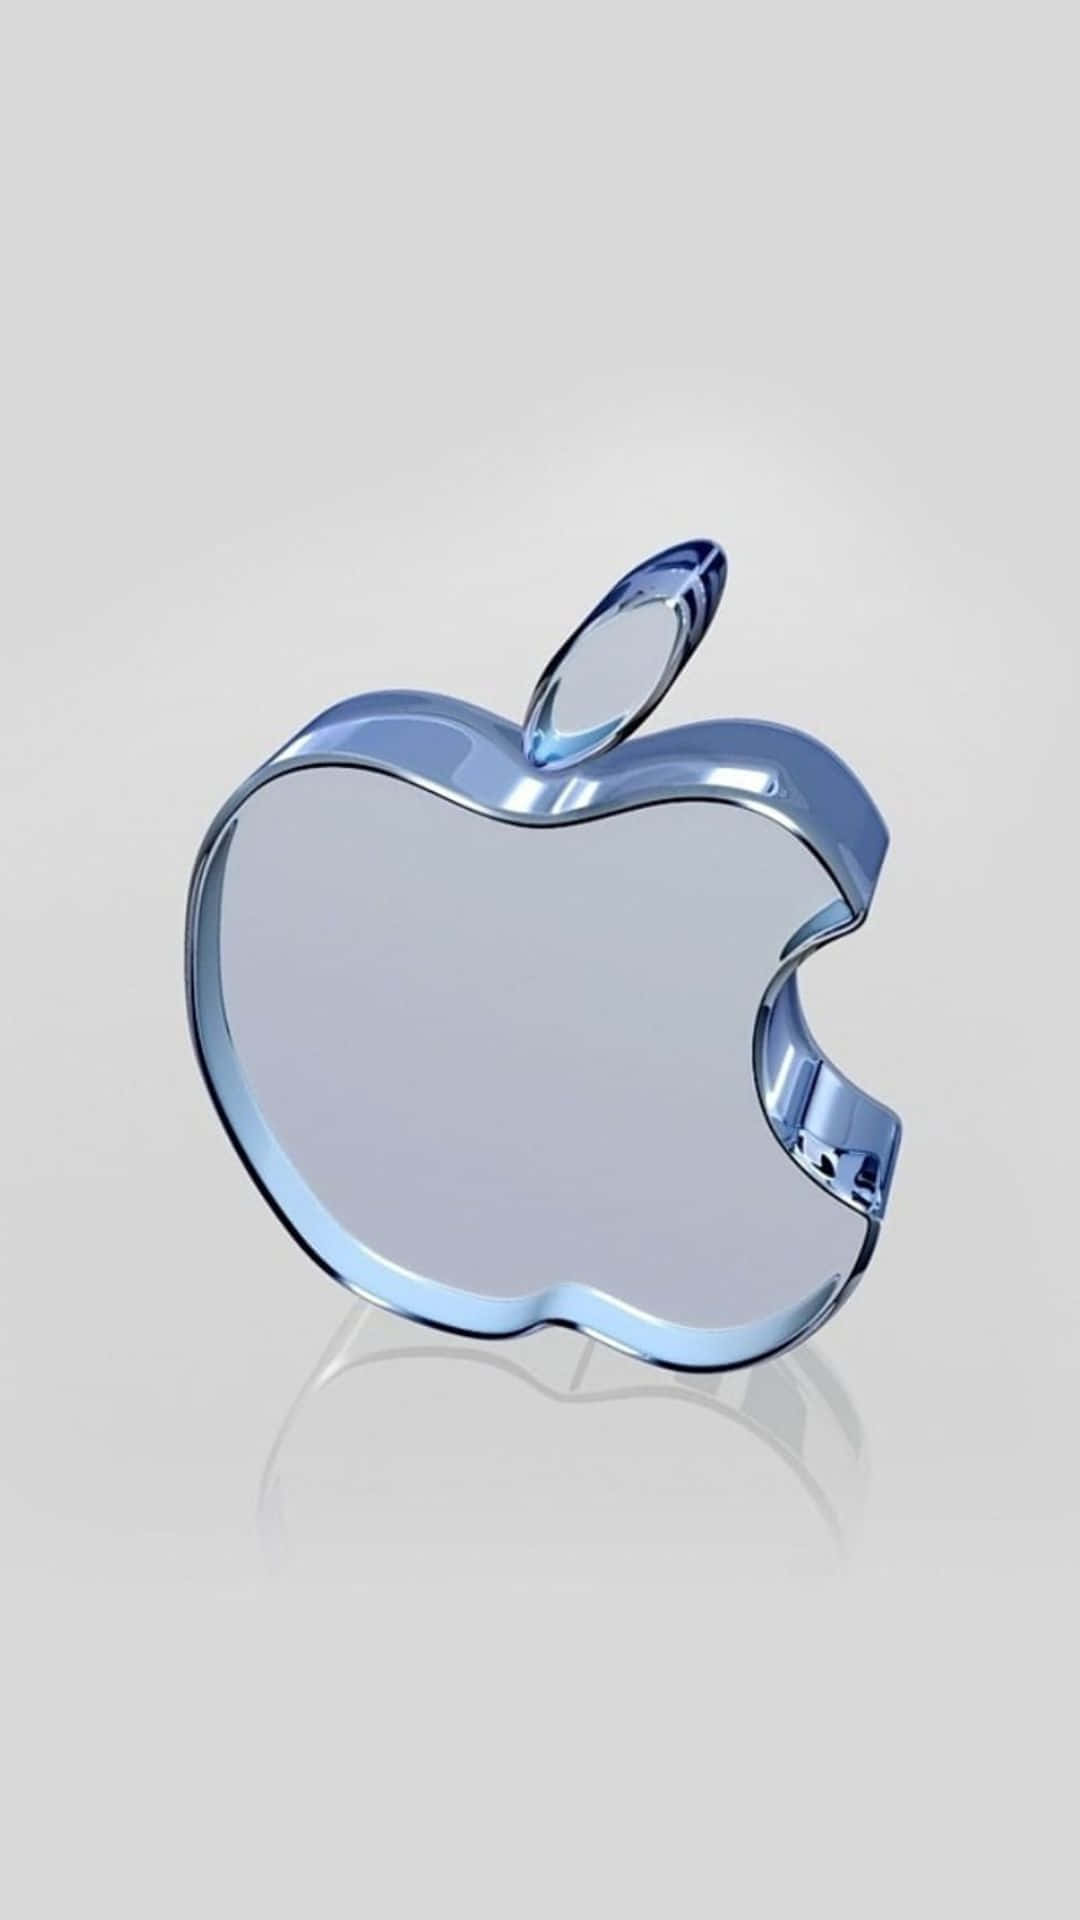 Sfondocon Logo Apple 3d In Vetro Pixelato